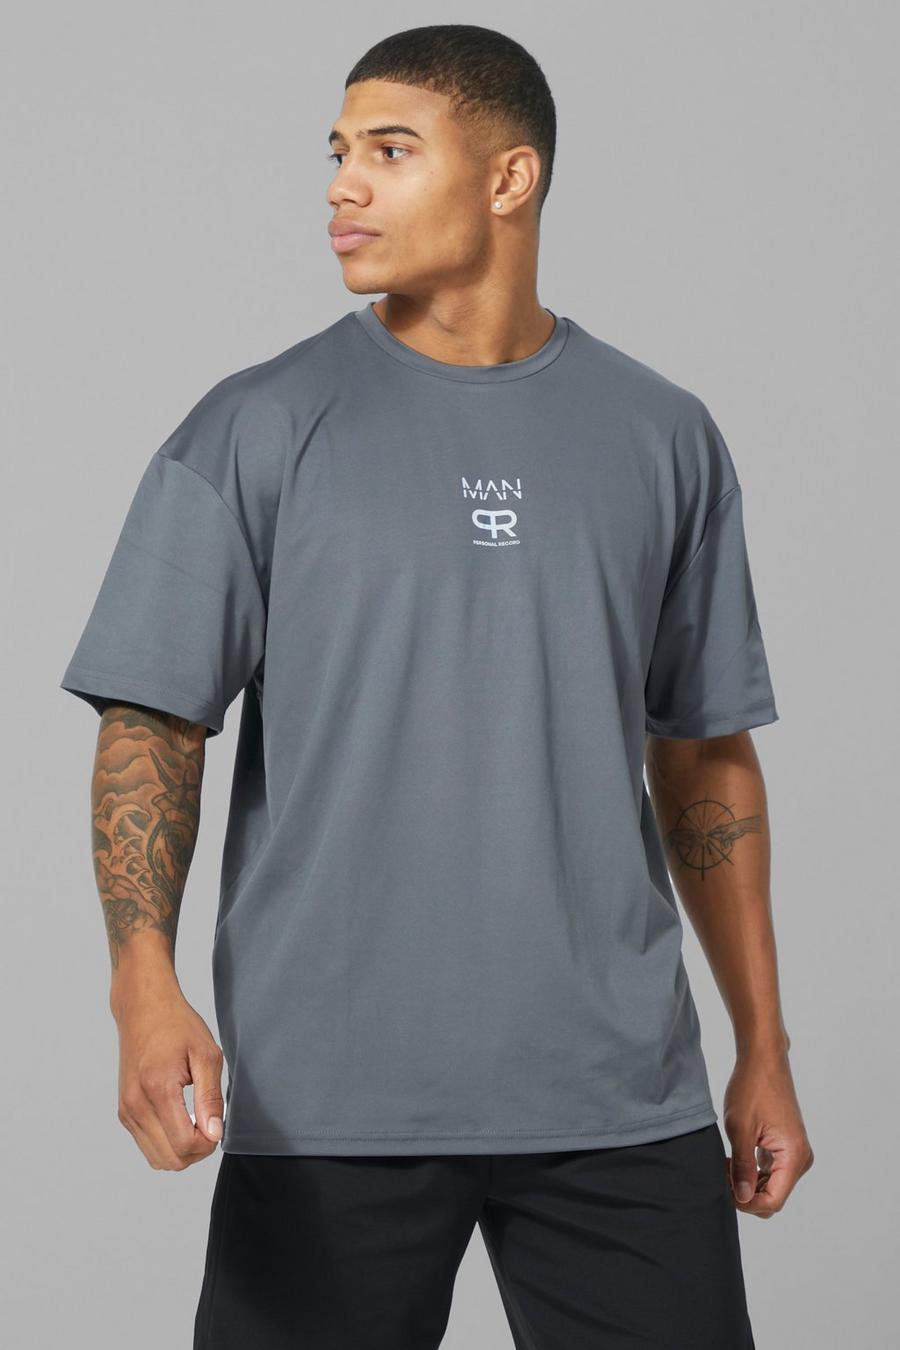 Man Active X Pr Performance Oversized T Shirt, Charcoal grau